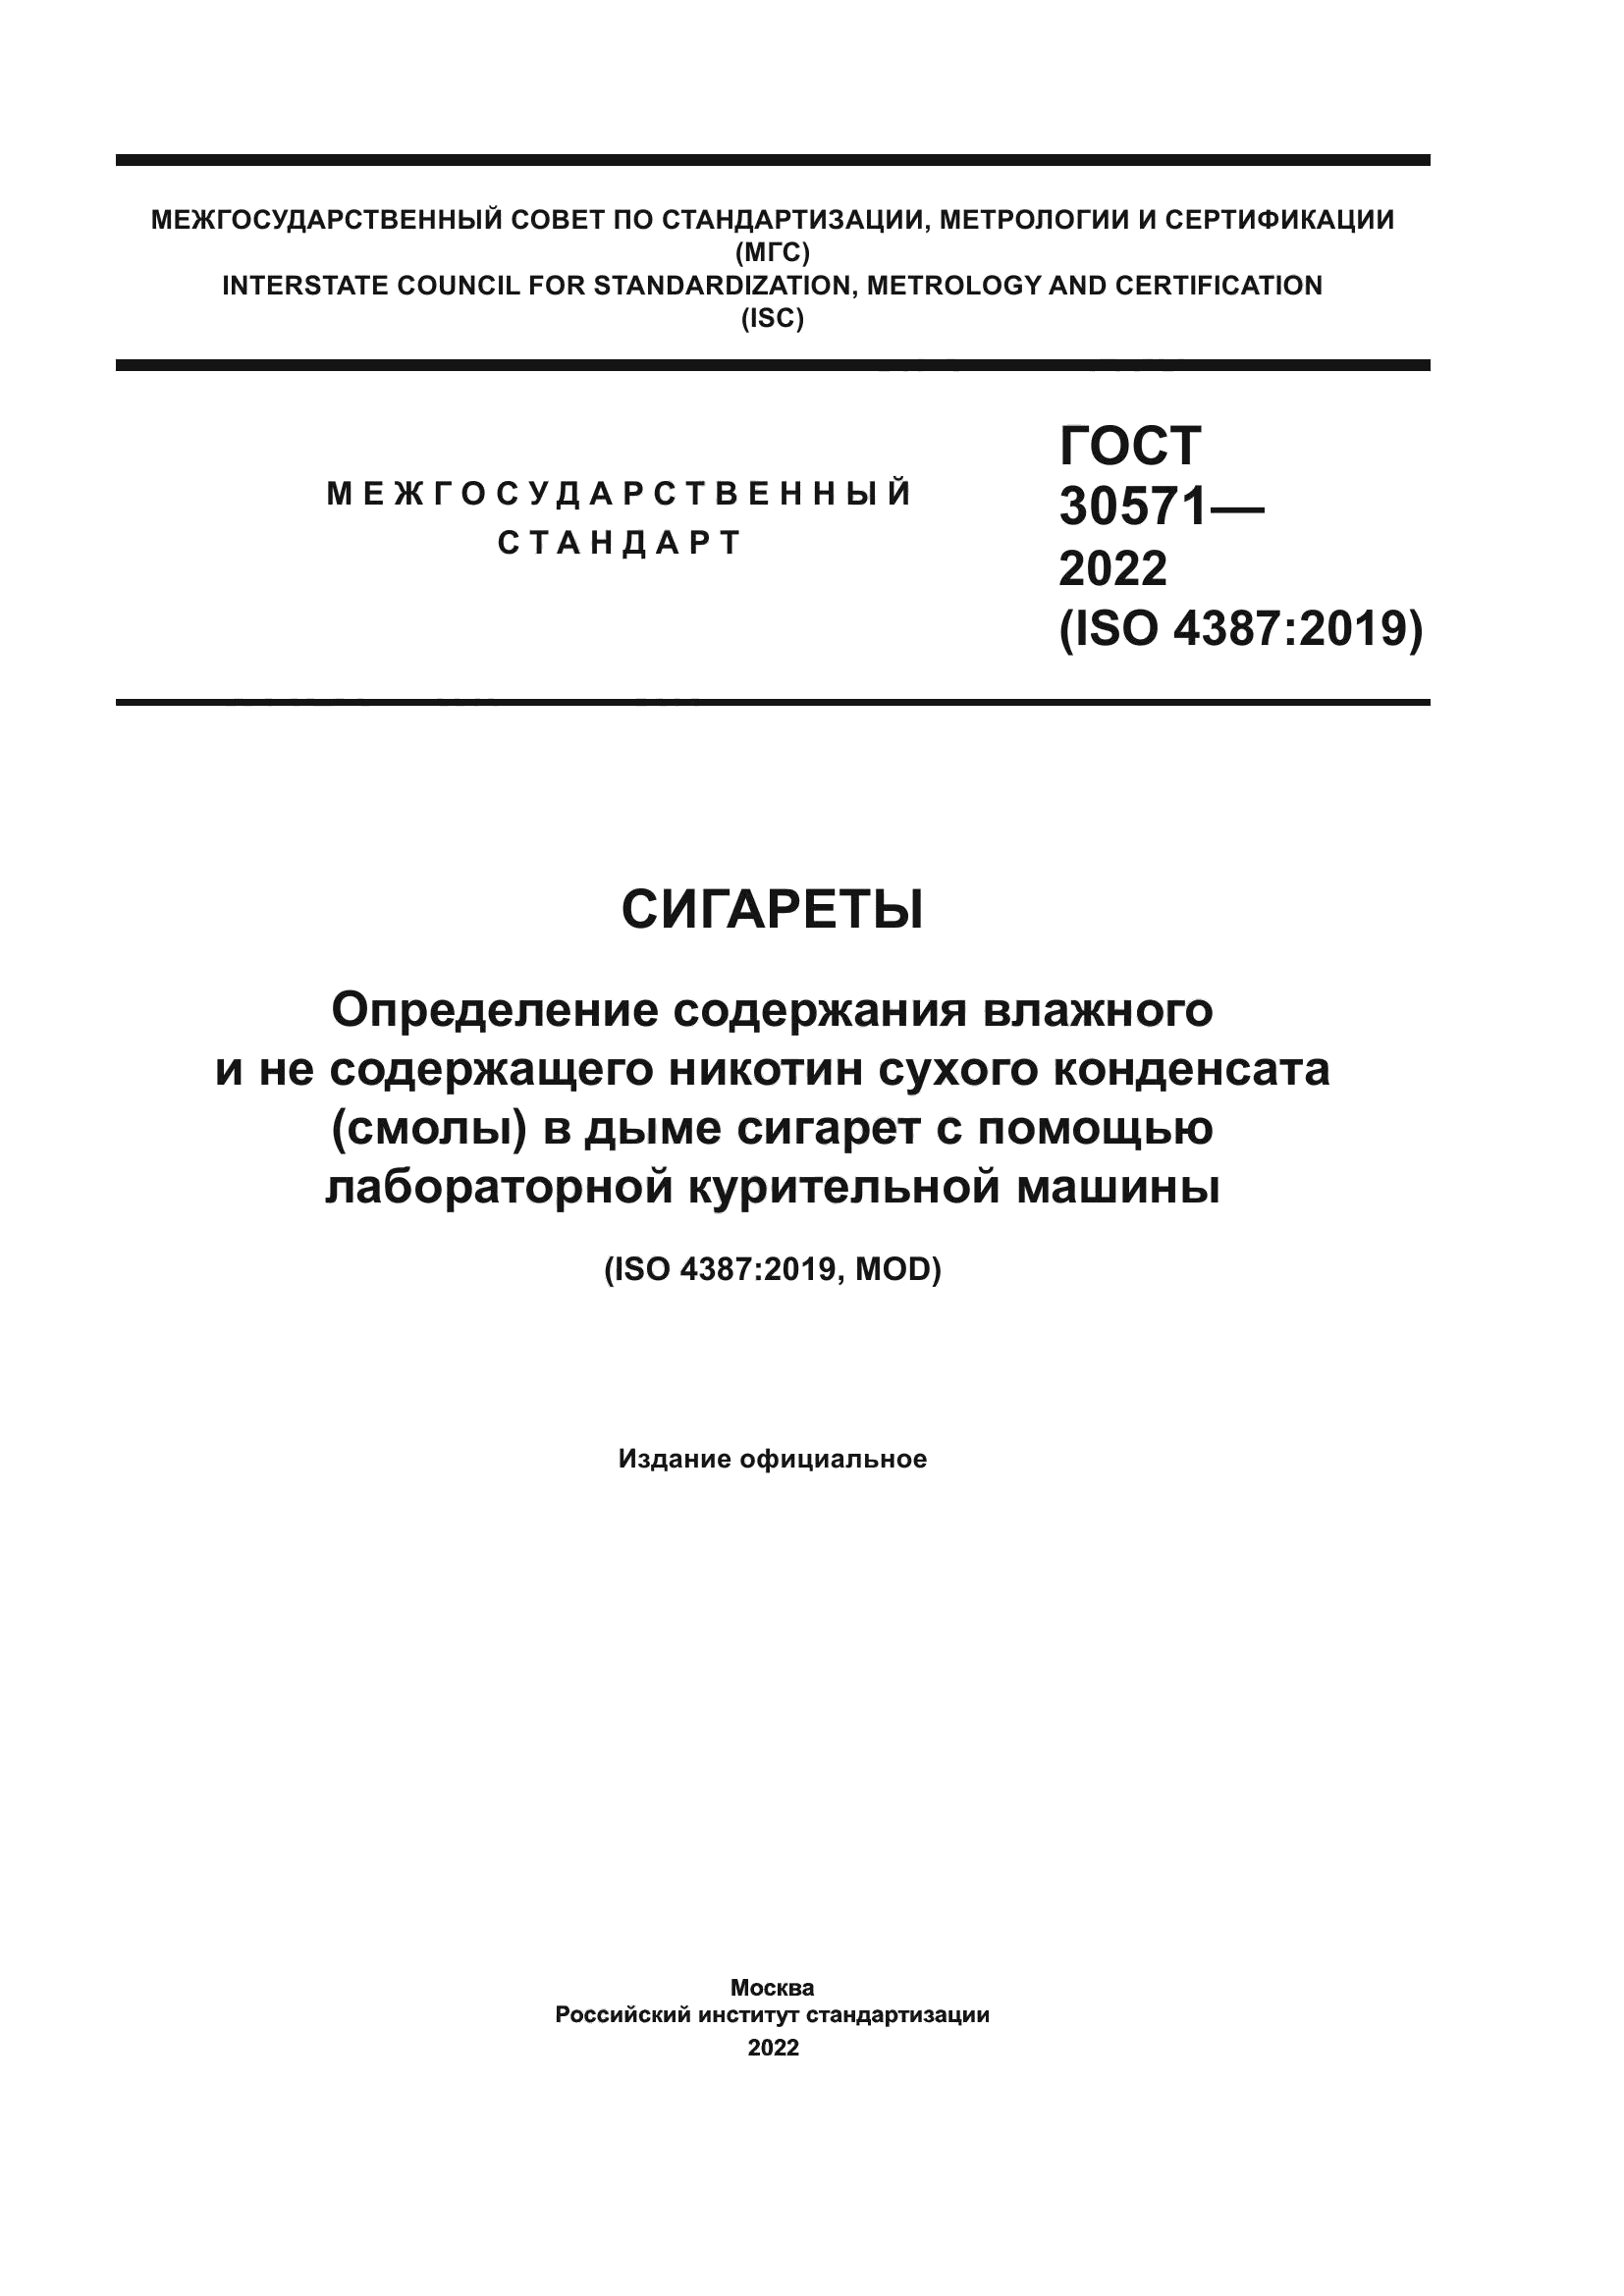 ГОСТ 30571-2022